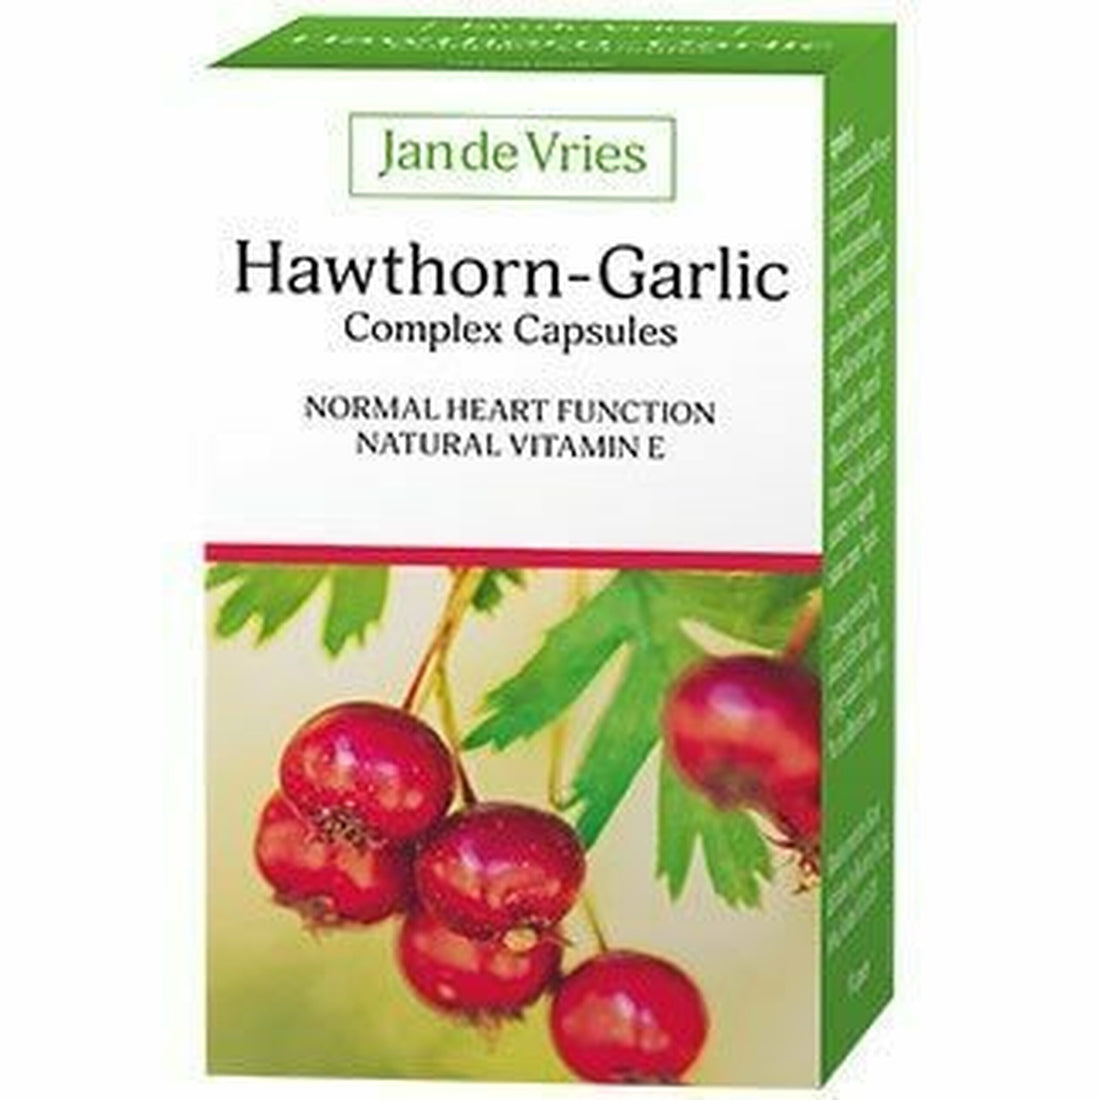 Jan de Vries Hawthorn - Garlic Complex Capsules (90&